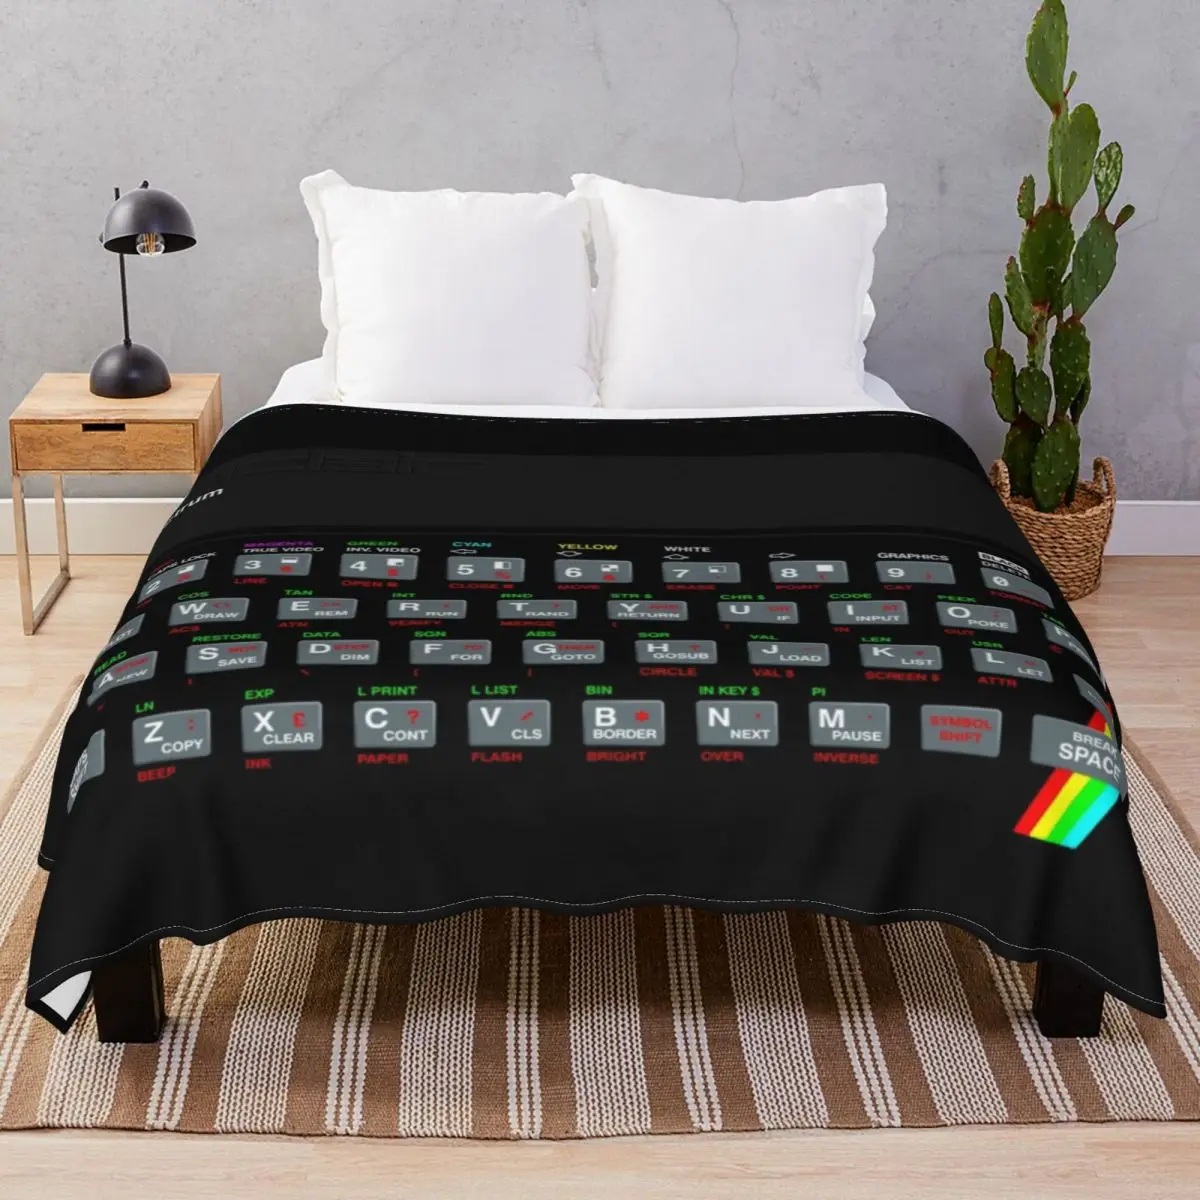 ZX Spectrum Blanket Flannel Textile Decor Soft Throw Blankets for Bedding Sofa Travel Cinema